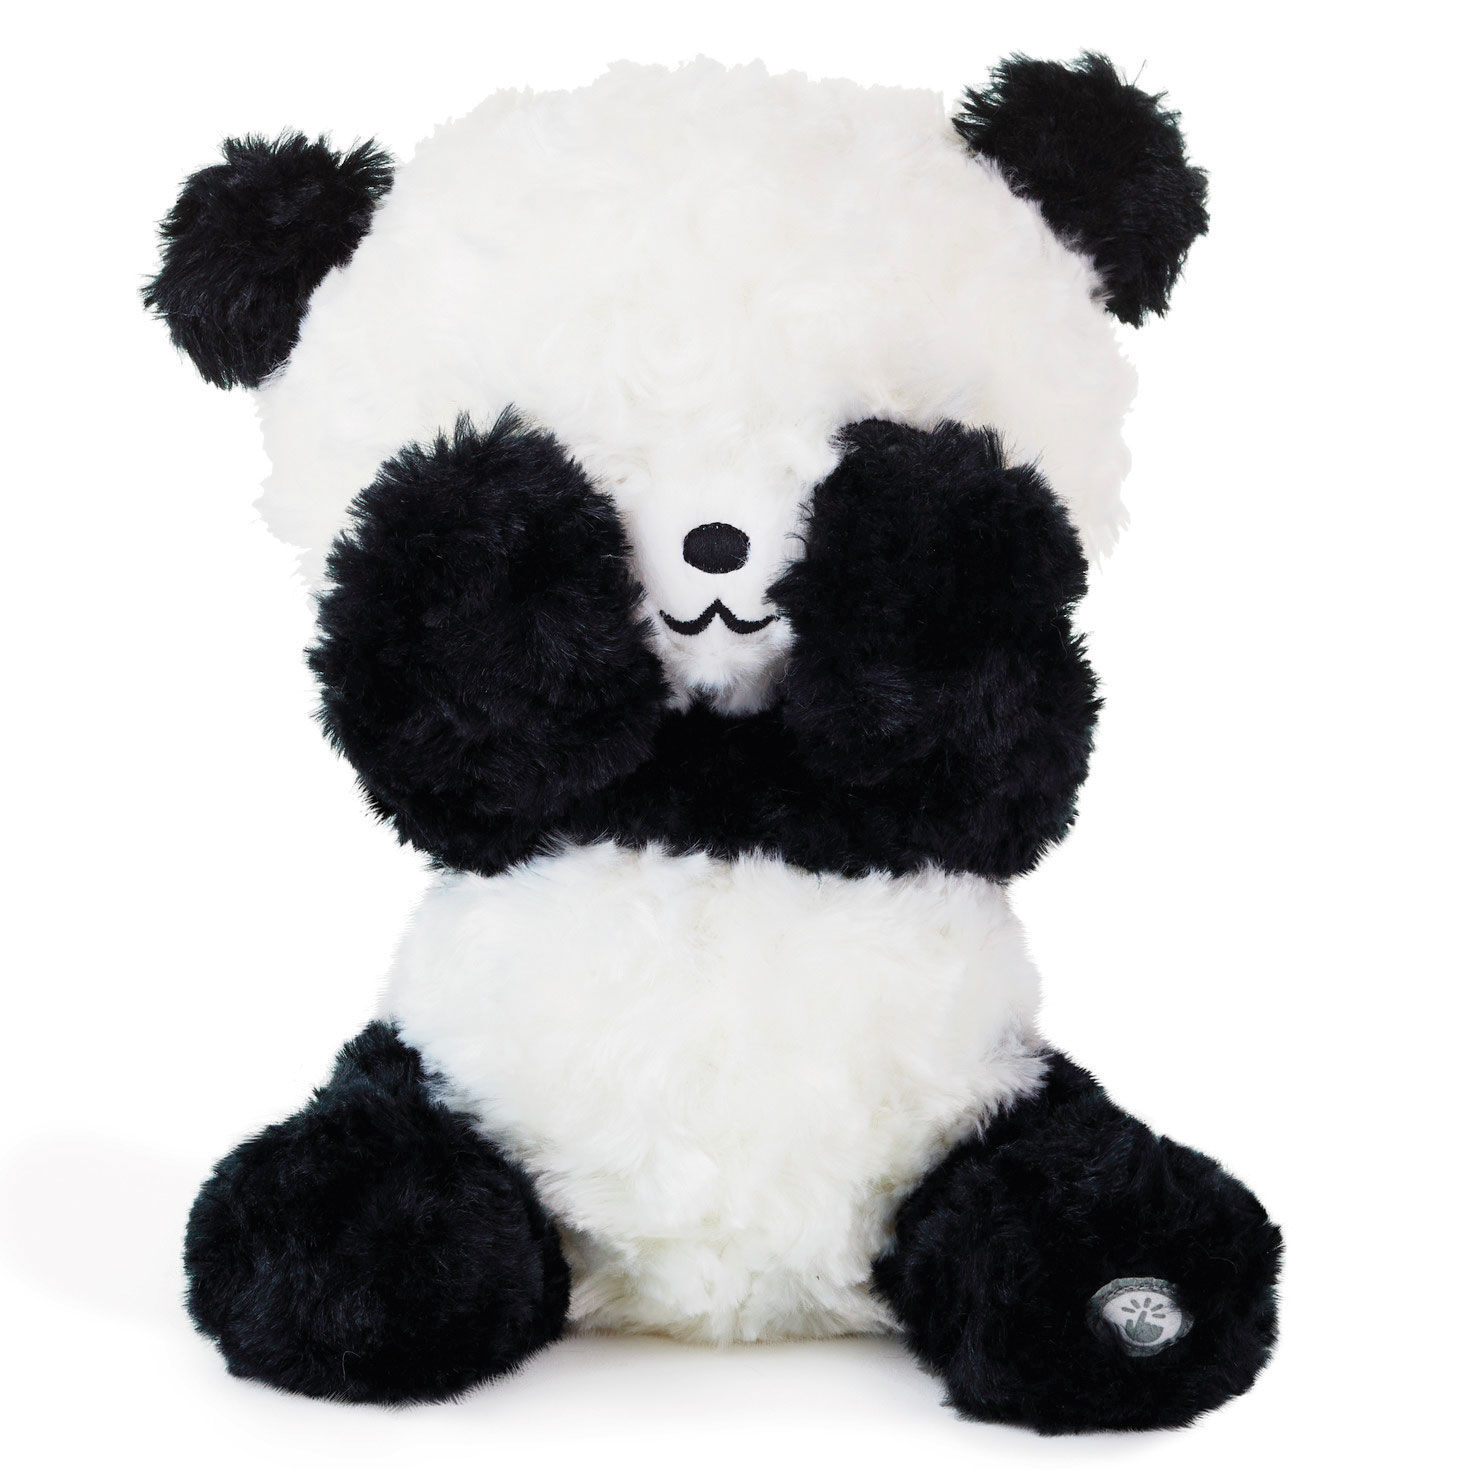 Gift Present Birthday Xmas Panda Bears NEW Small Cute Soft Cuddly 